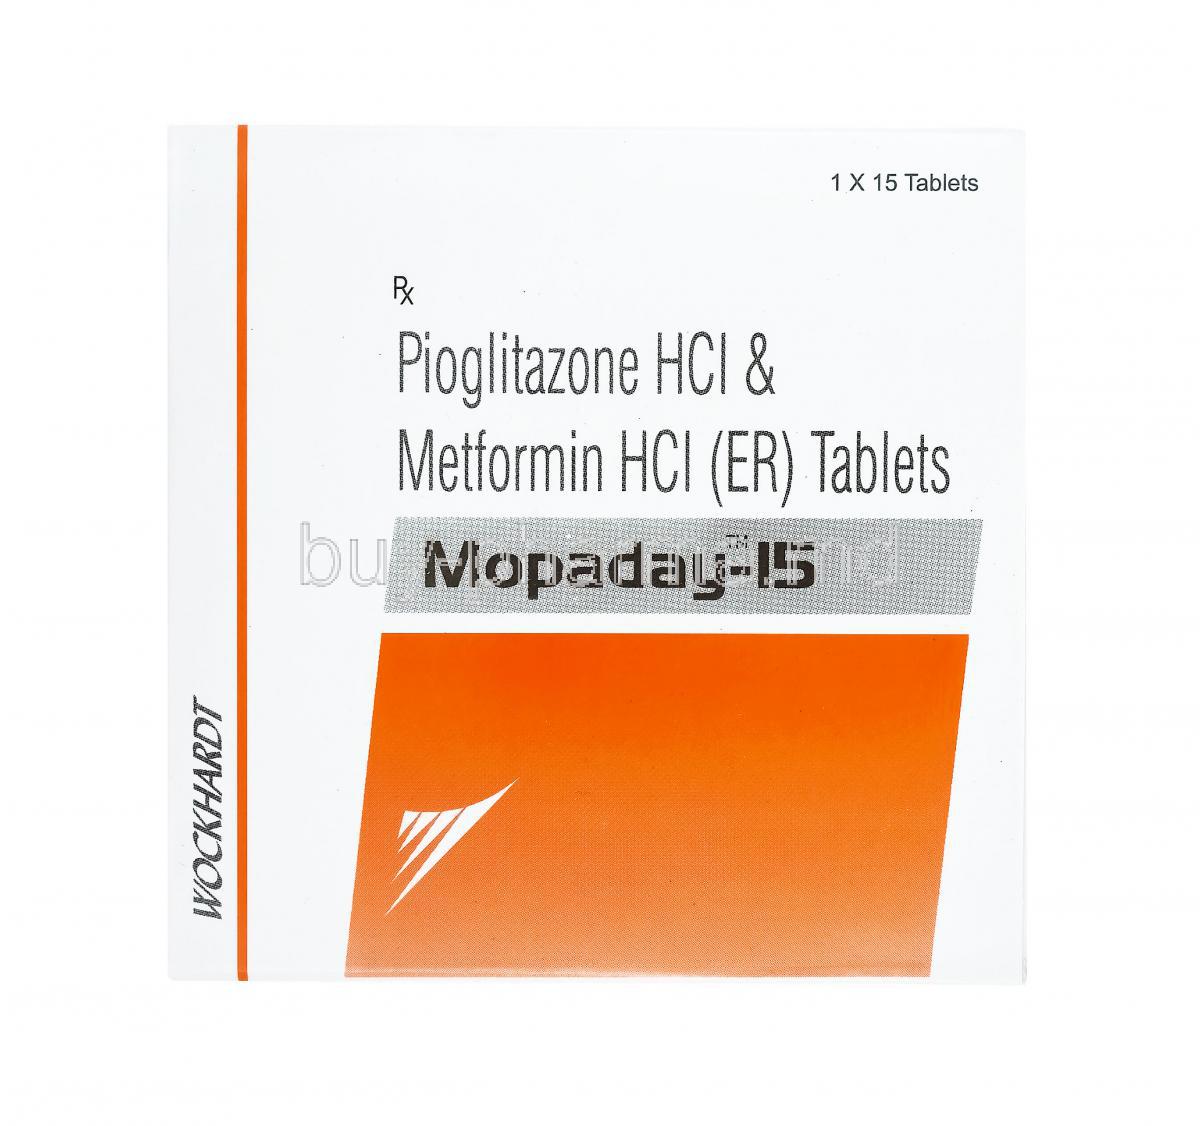 Mopaday, Pioglitazone and Metformin